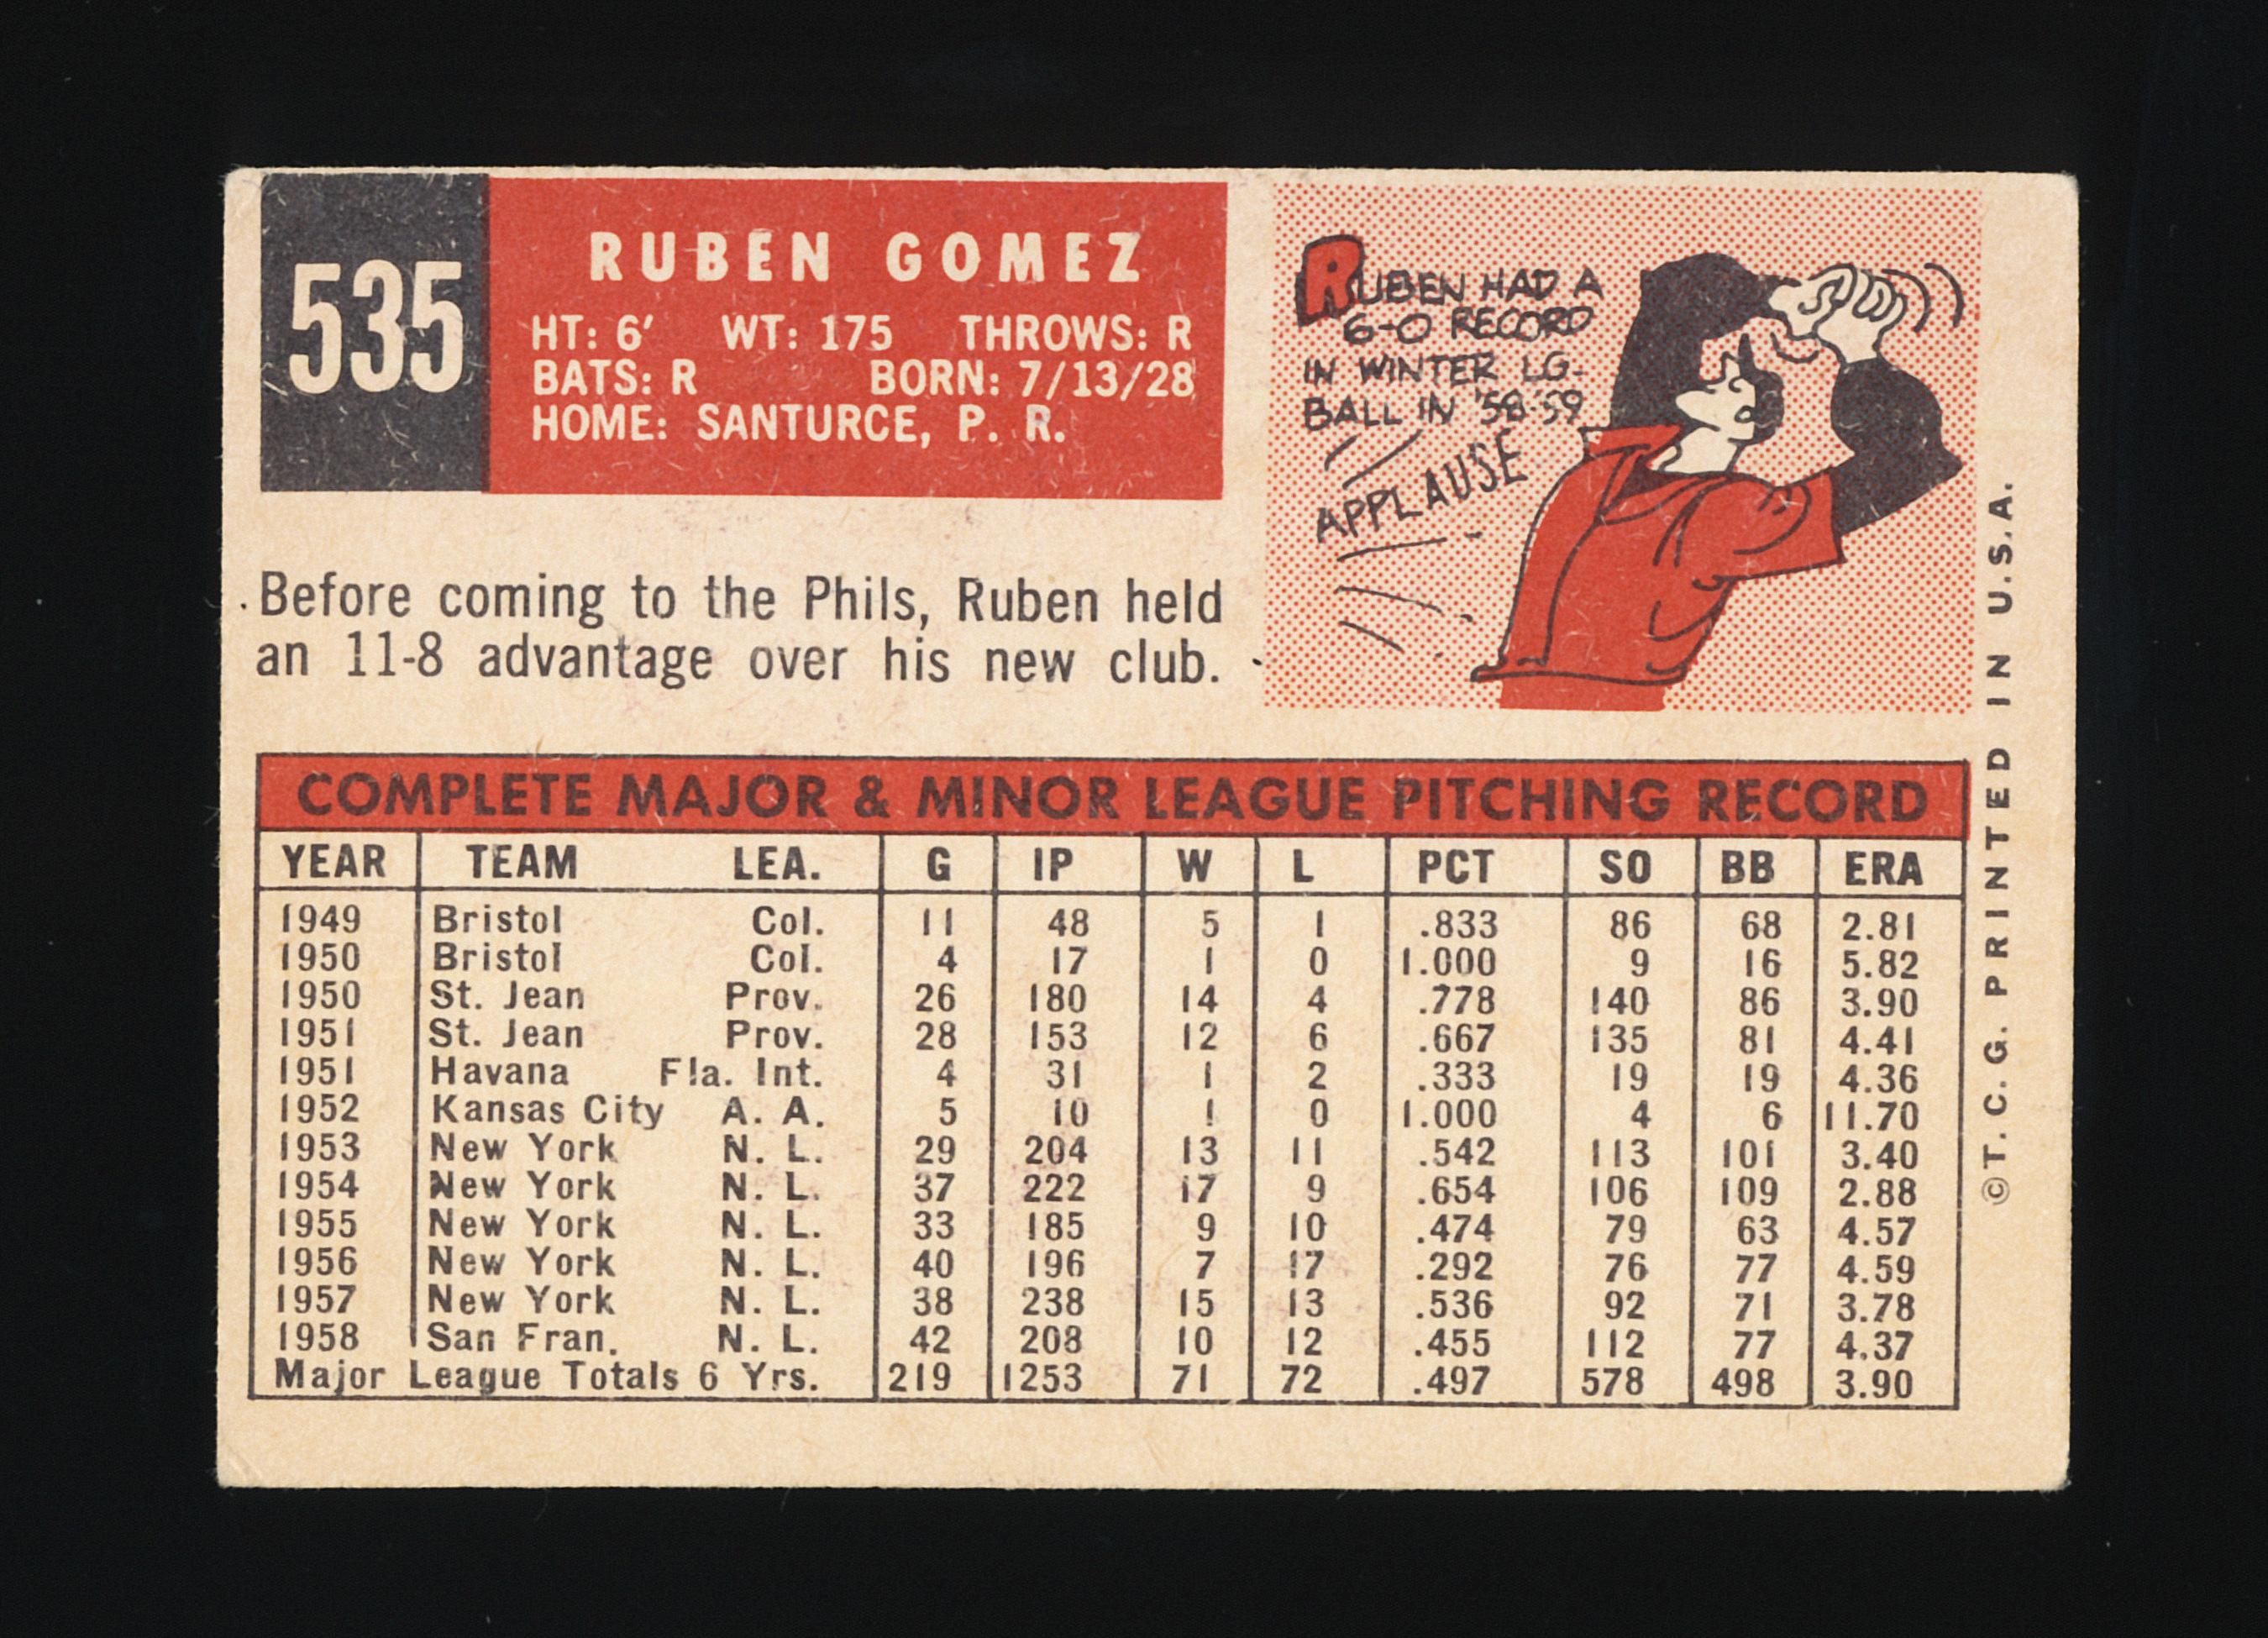 1959 Topps Baseball Card #535 Ruben Gomez Philadelphia Phillies